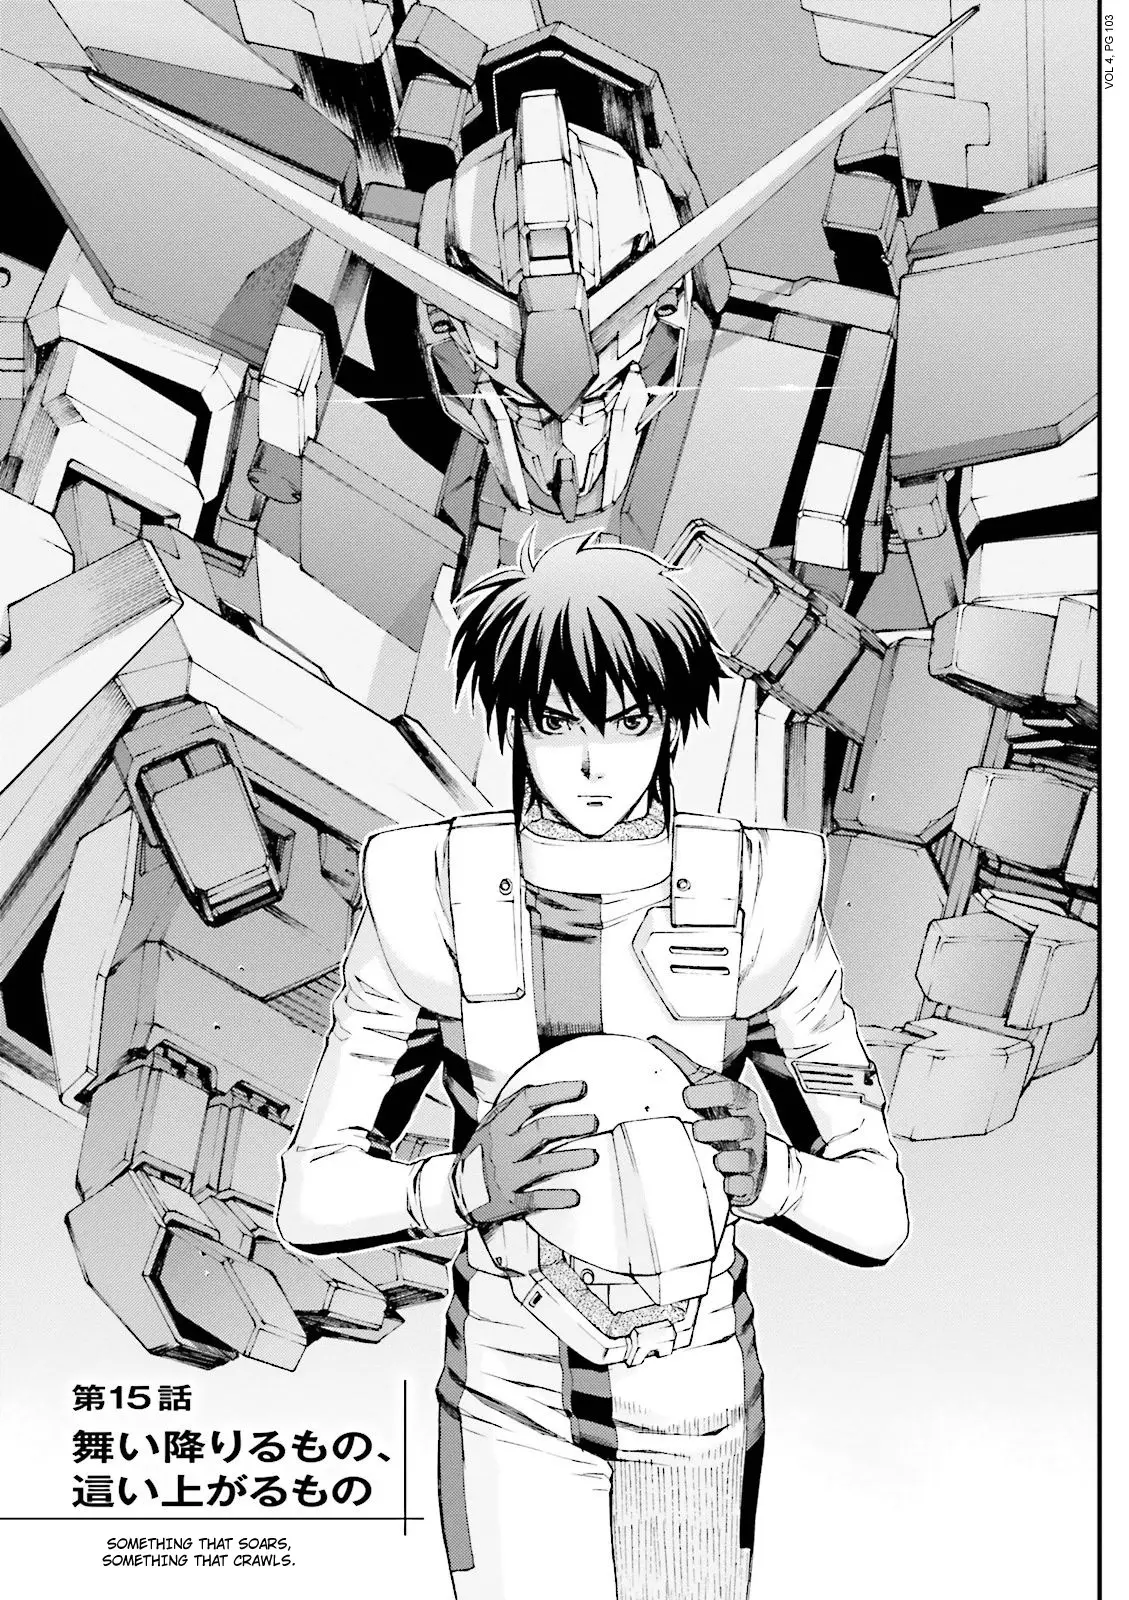 Kidou Senshi Gundam U.c. 0094 - Across The Sky - 15 page 1-44d3cac6